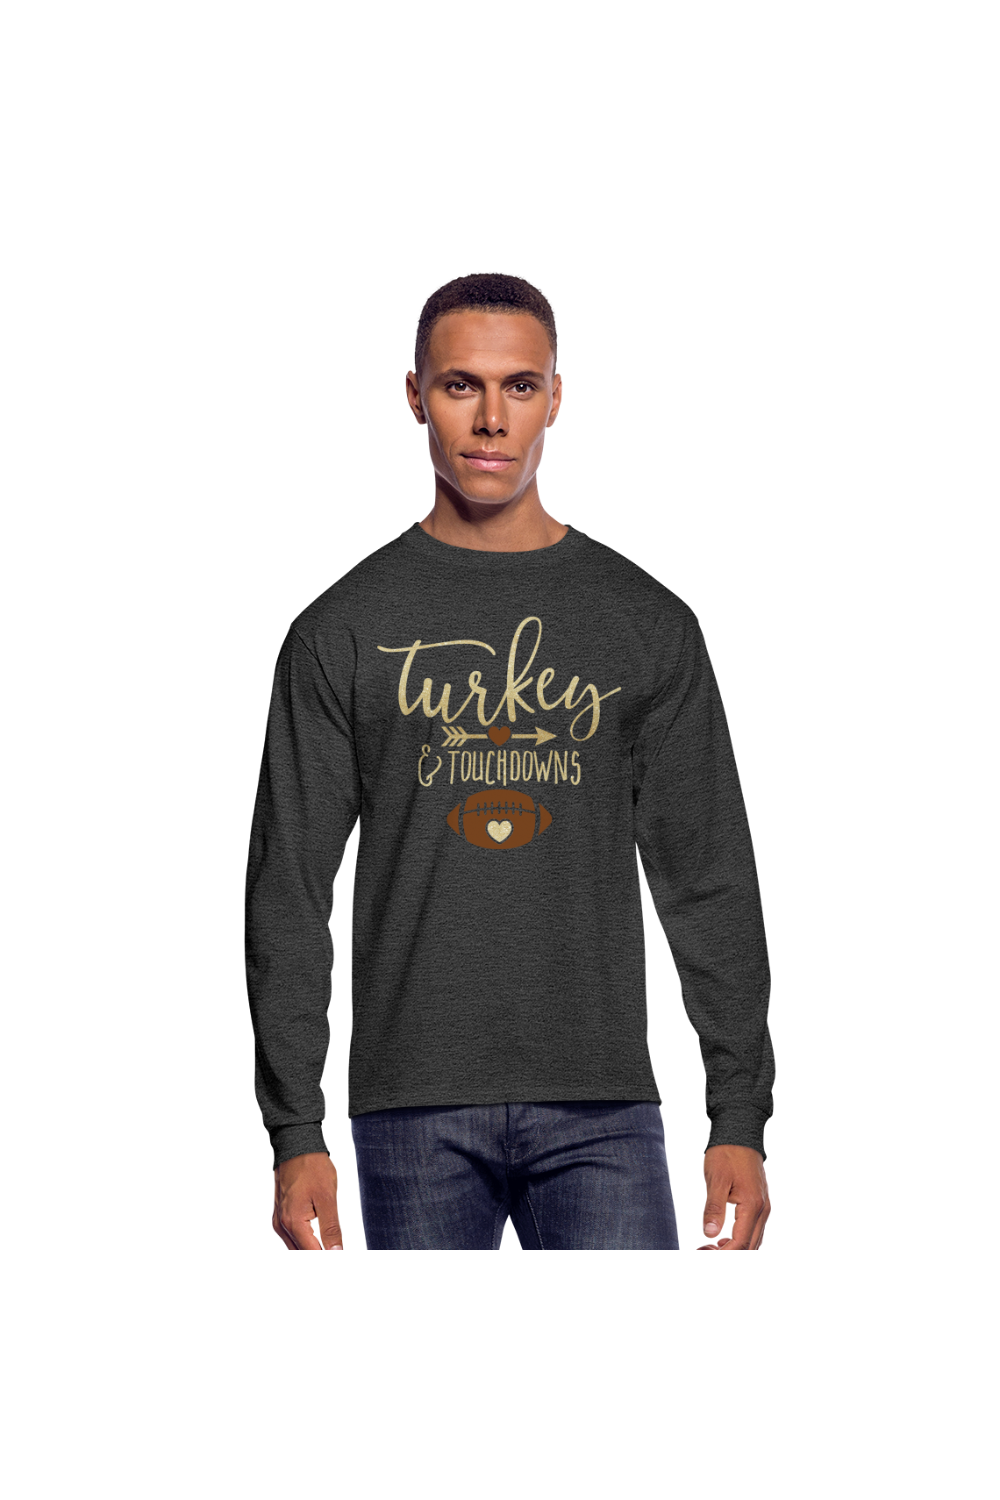 Men Thanksgiving T-Shirt Turkey and Touchdowns Long Sleeve - heather black